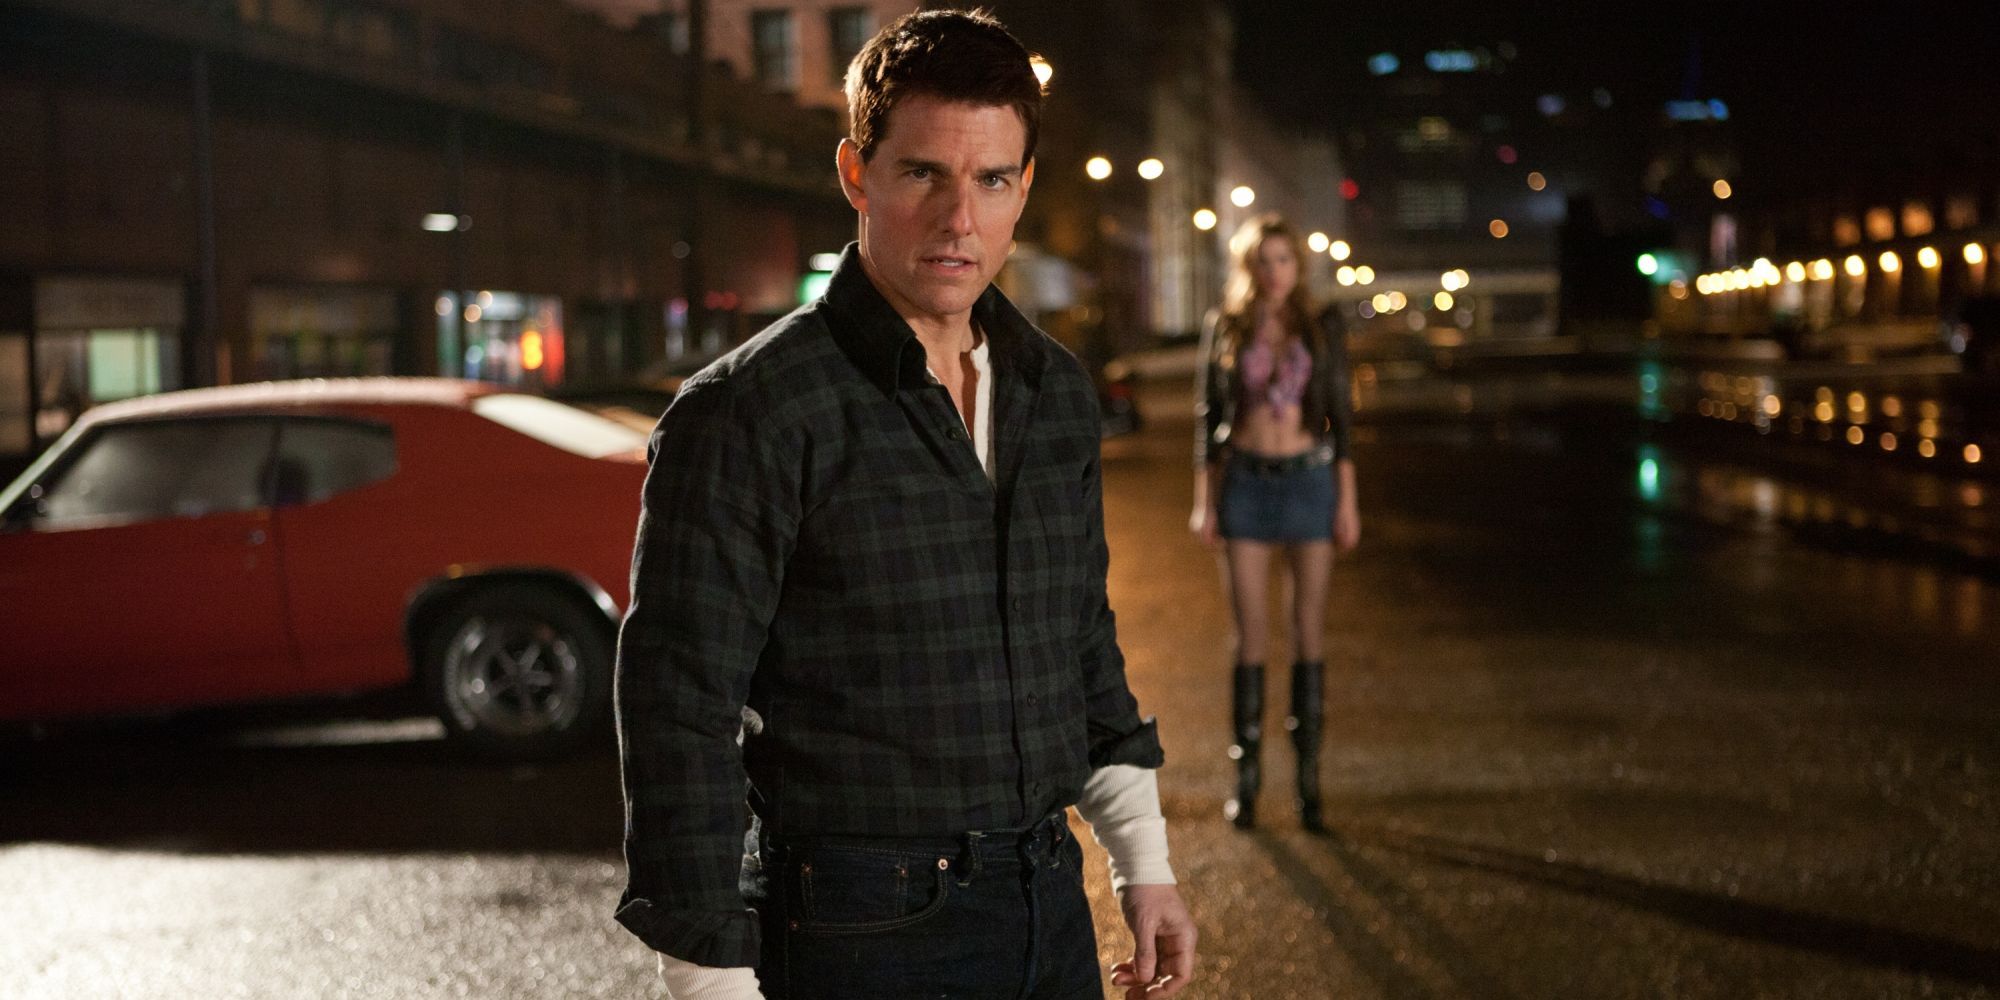 Tom Cruise as Jack Ryan, standing in the street at night in 2012's Jack Ryan